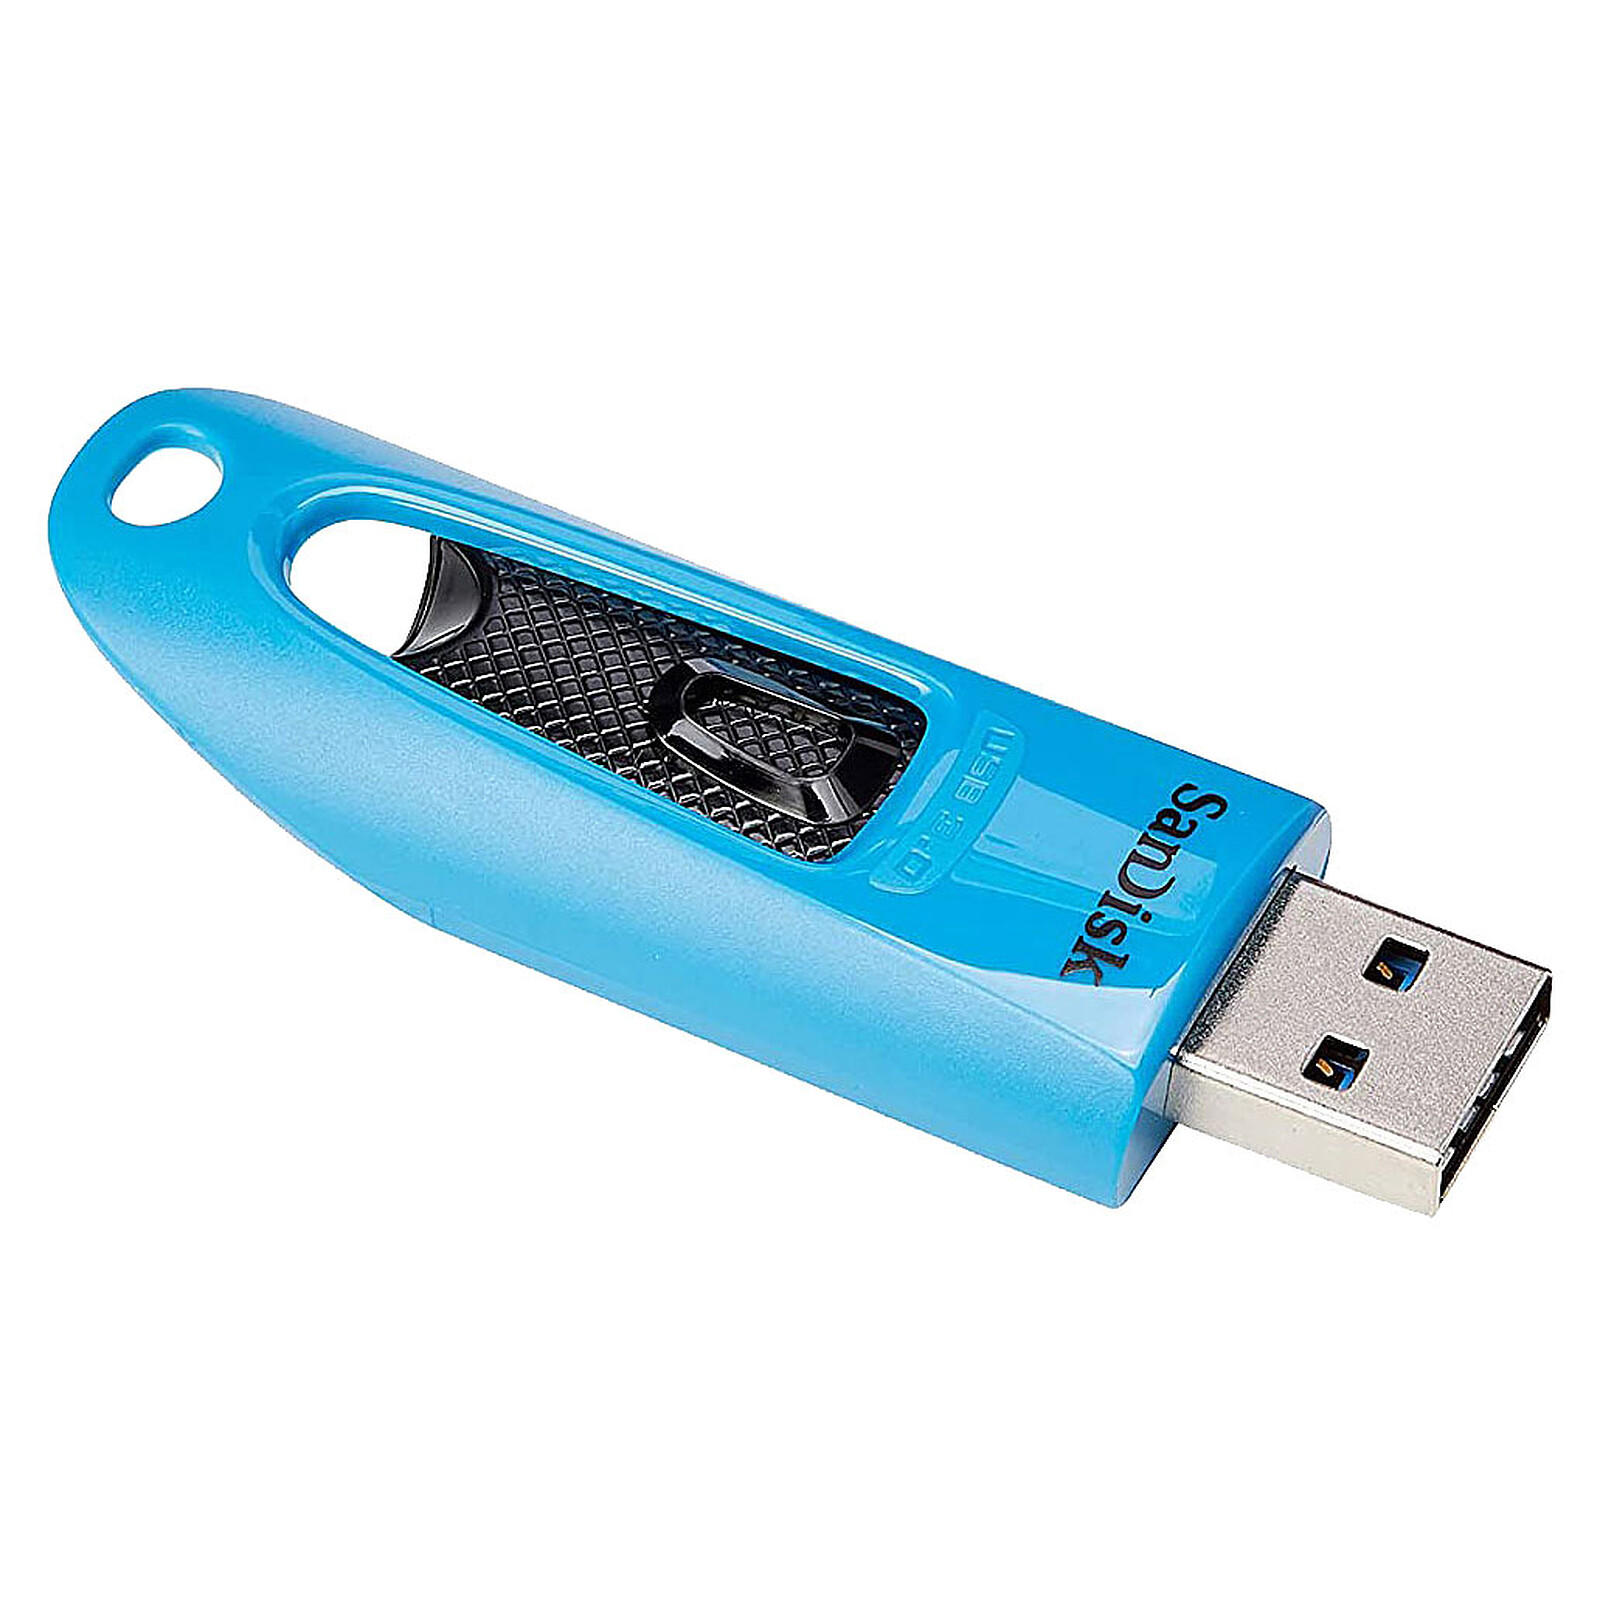 Sandisk Ultra Slider USB Type-C 256 Go - Clé USB - LDLC